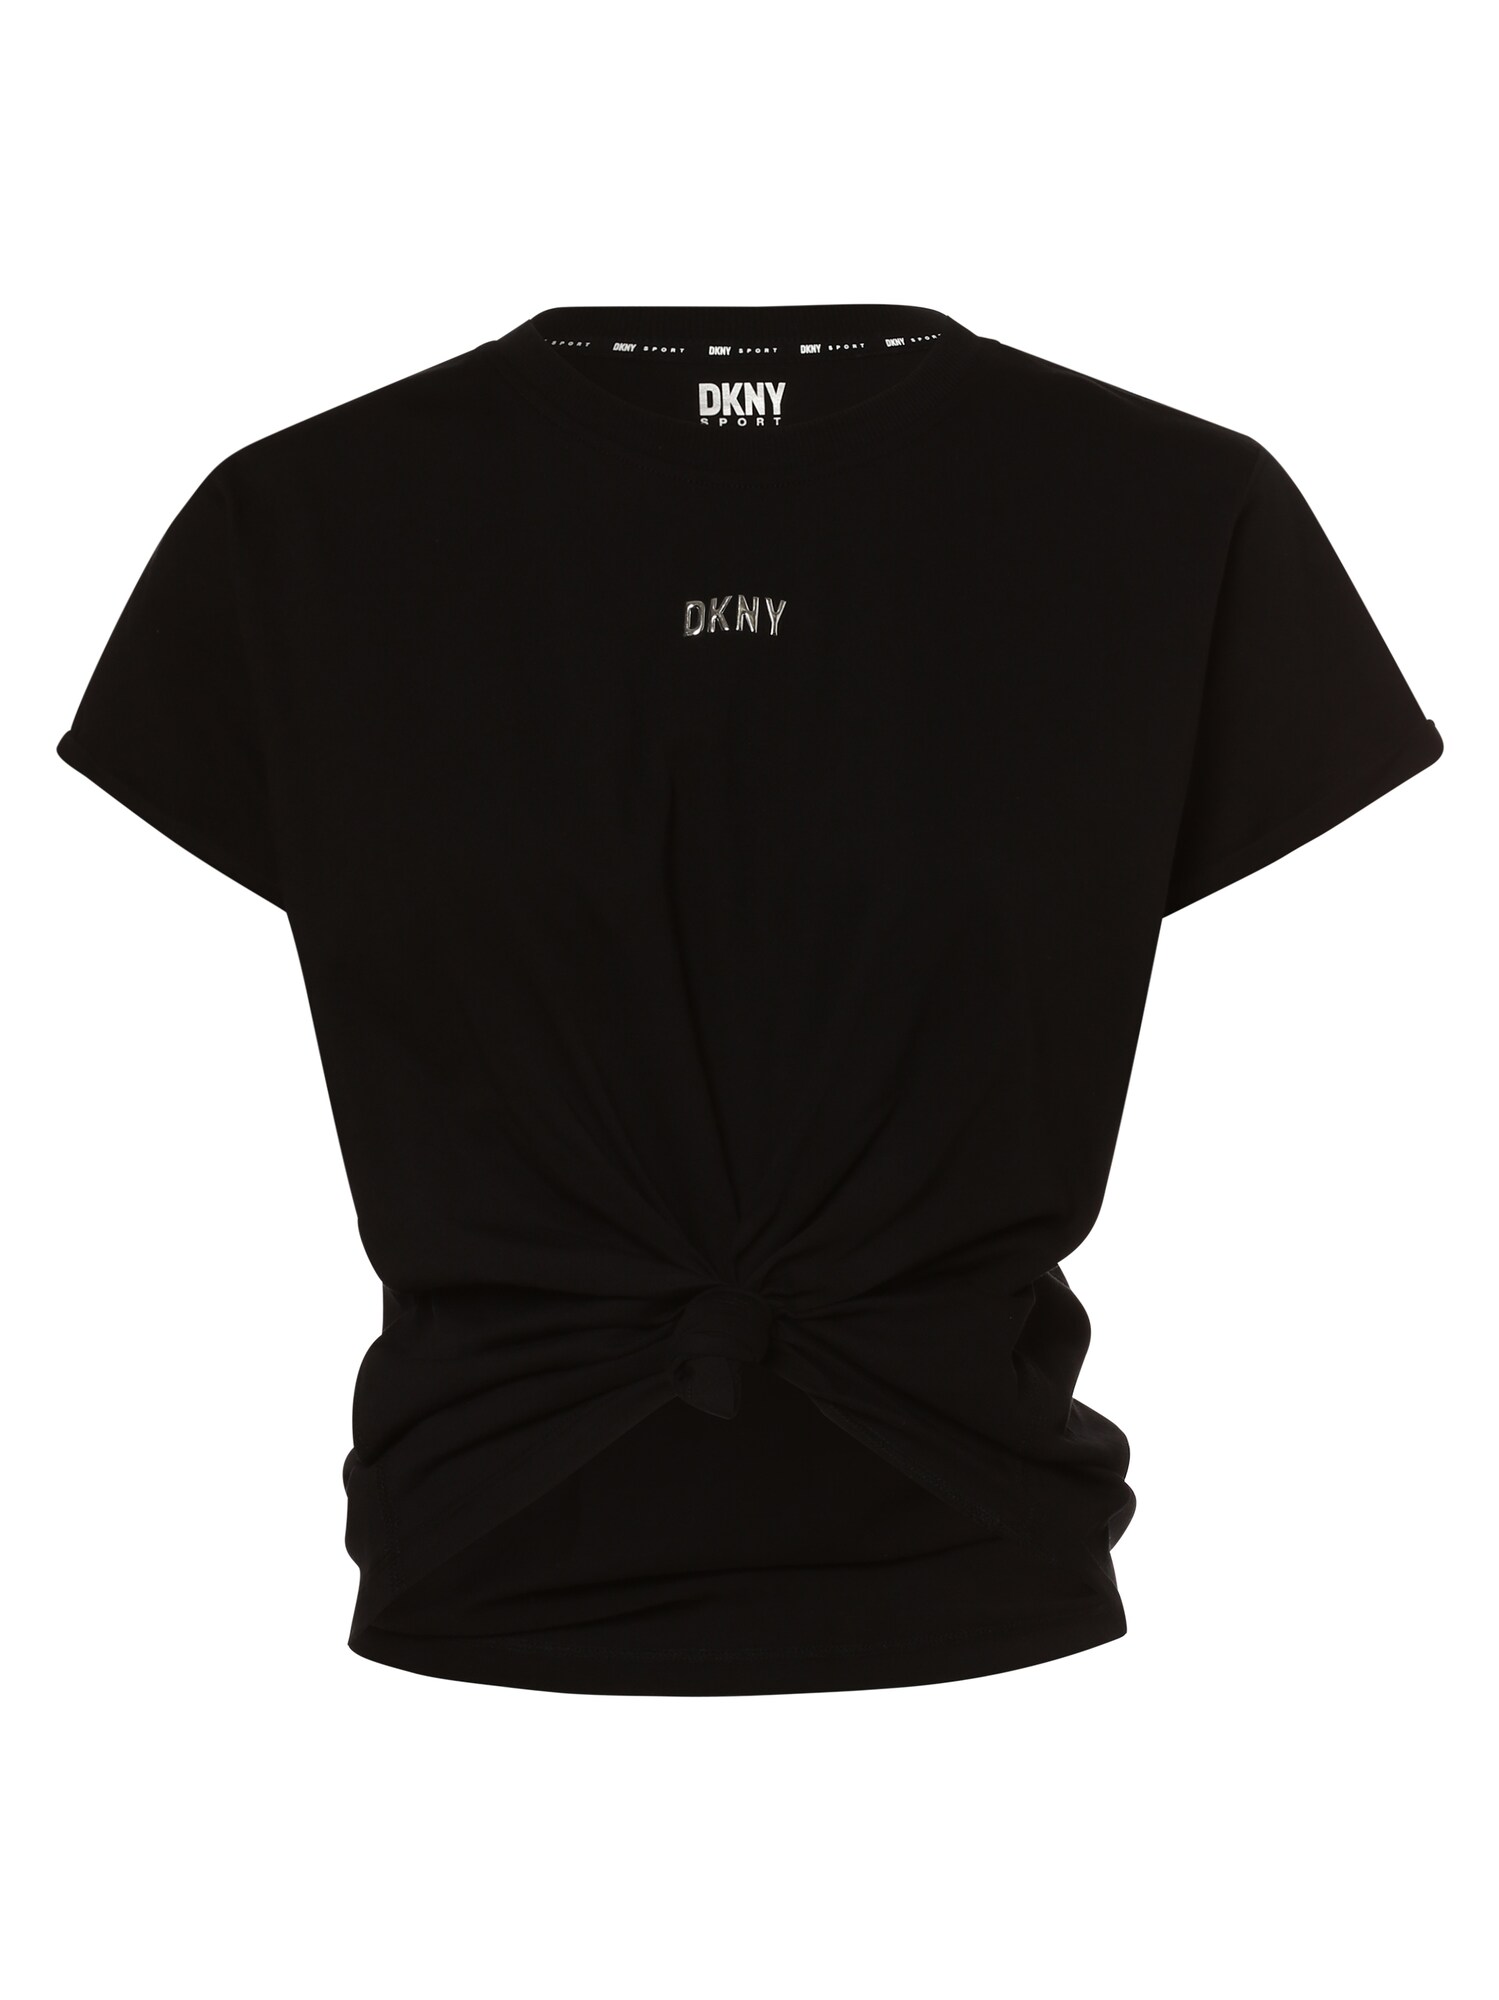 DKNY T-Shirt schwarz / silber